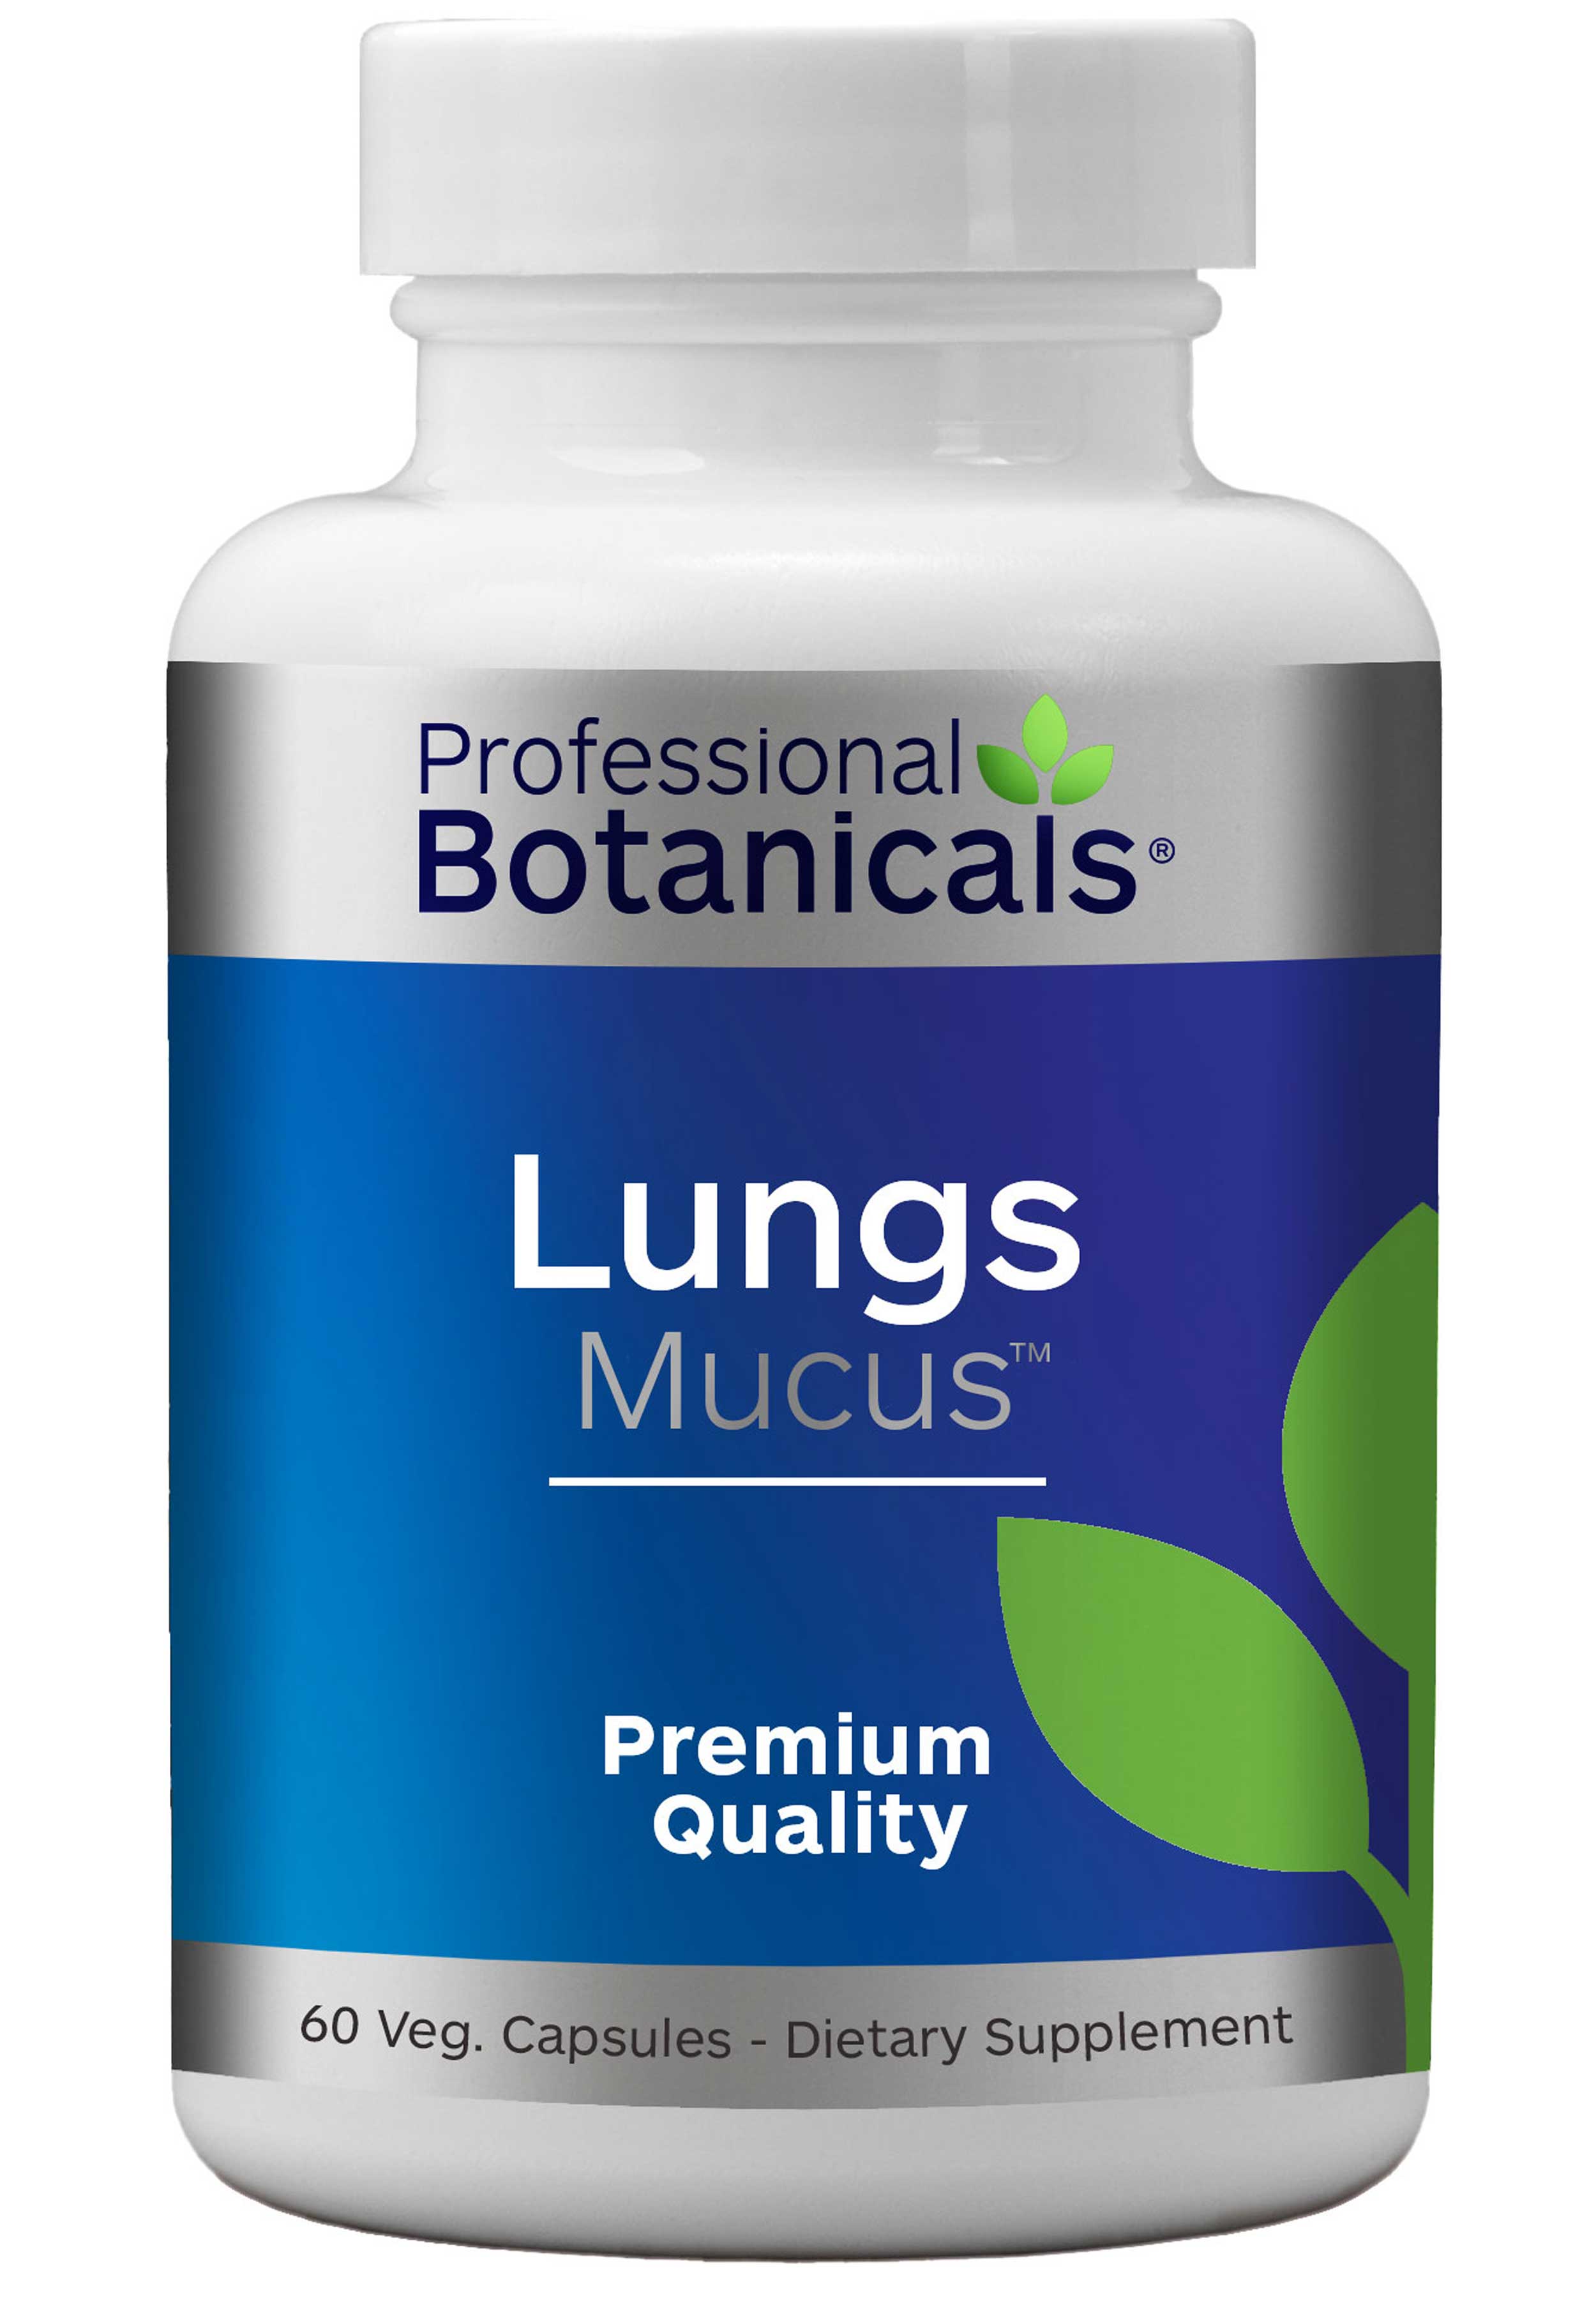 Professional Botanicals Lungs Mucus